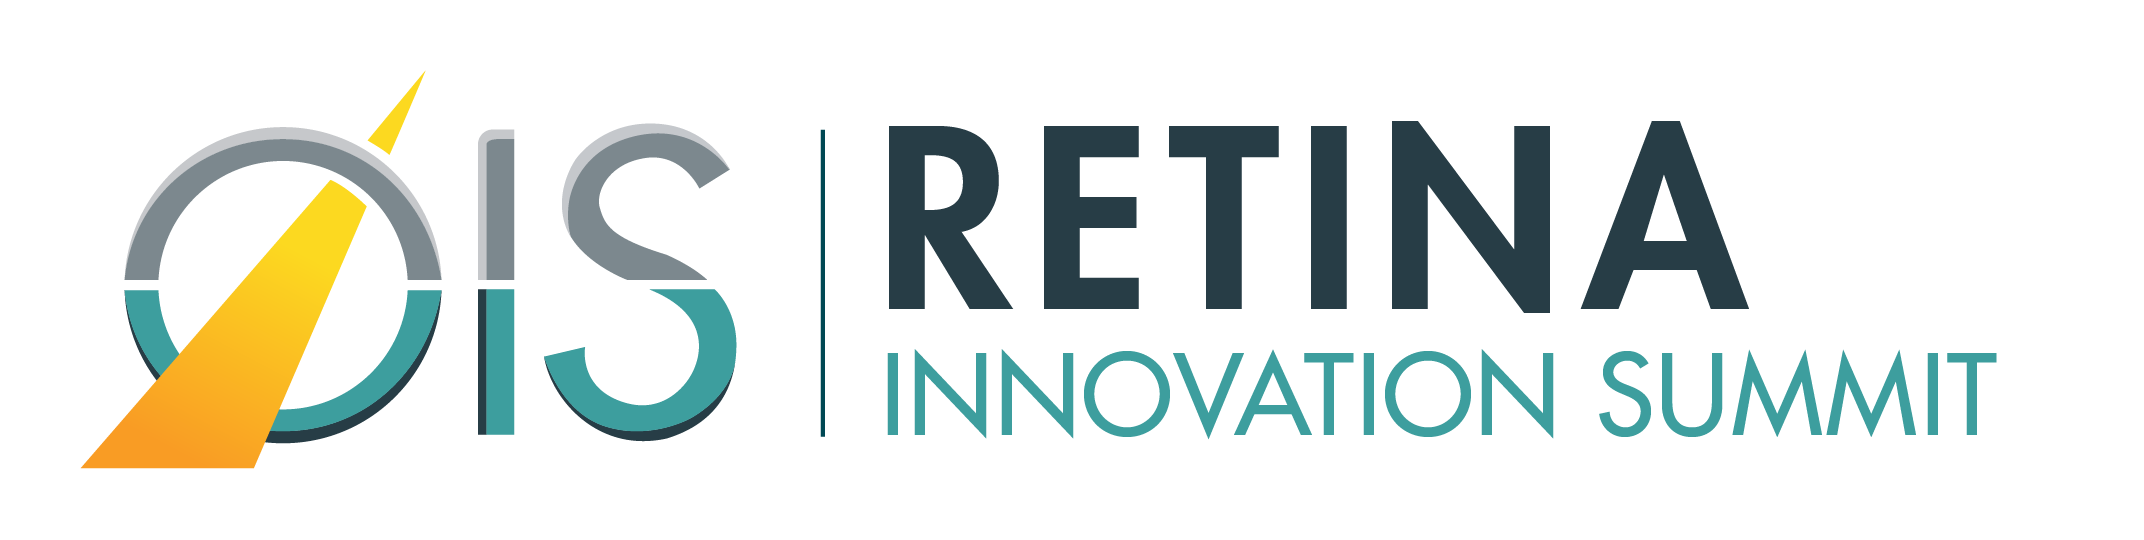 Retina Innovation Summit Logo-AI-01